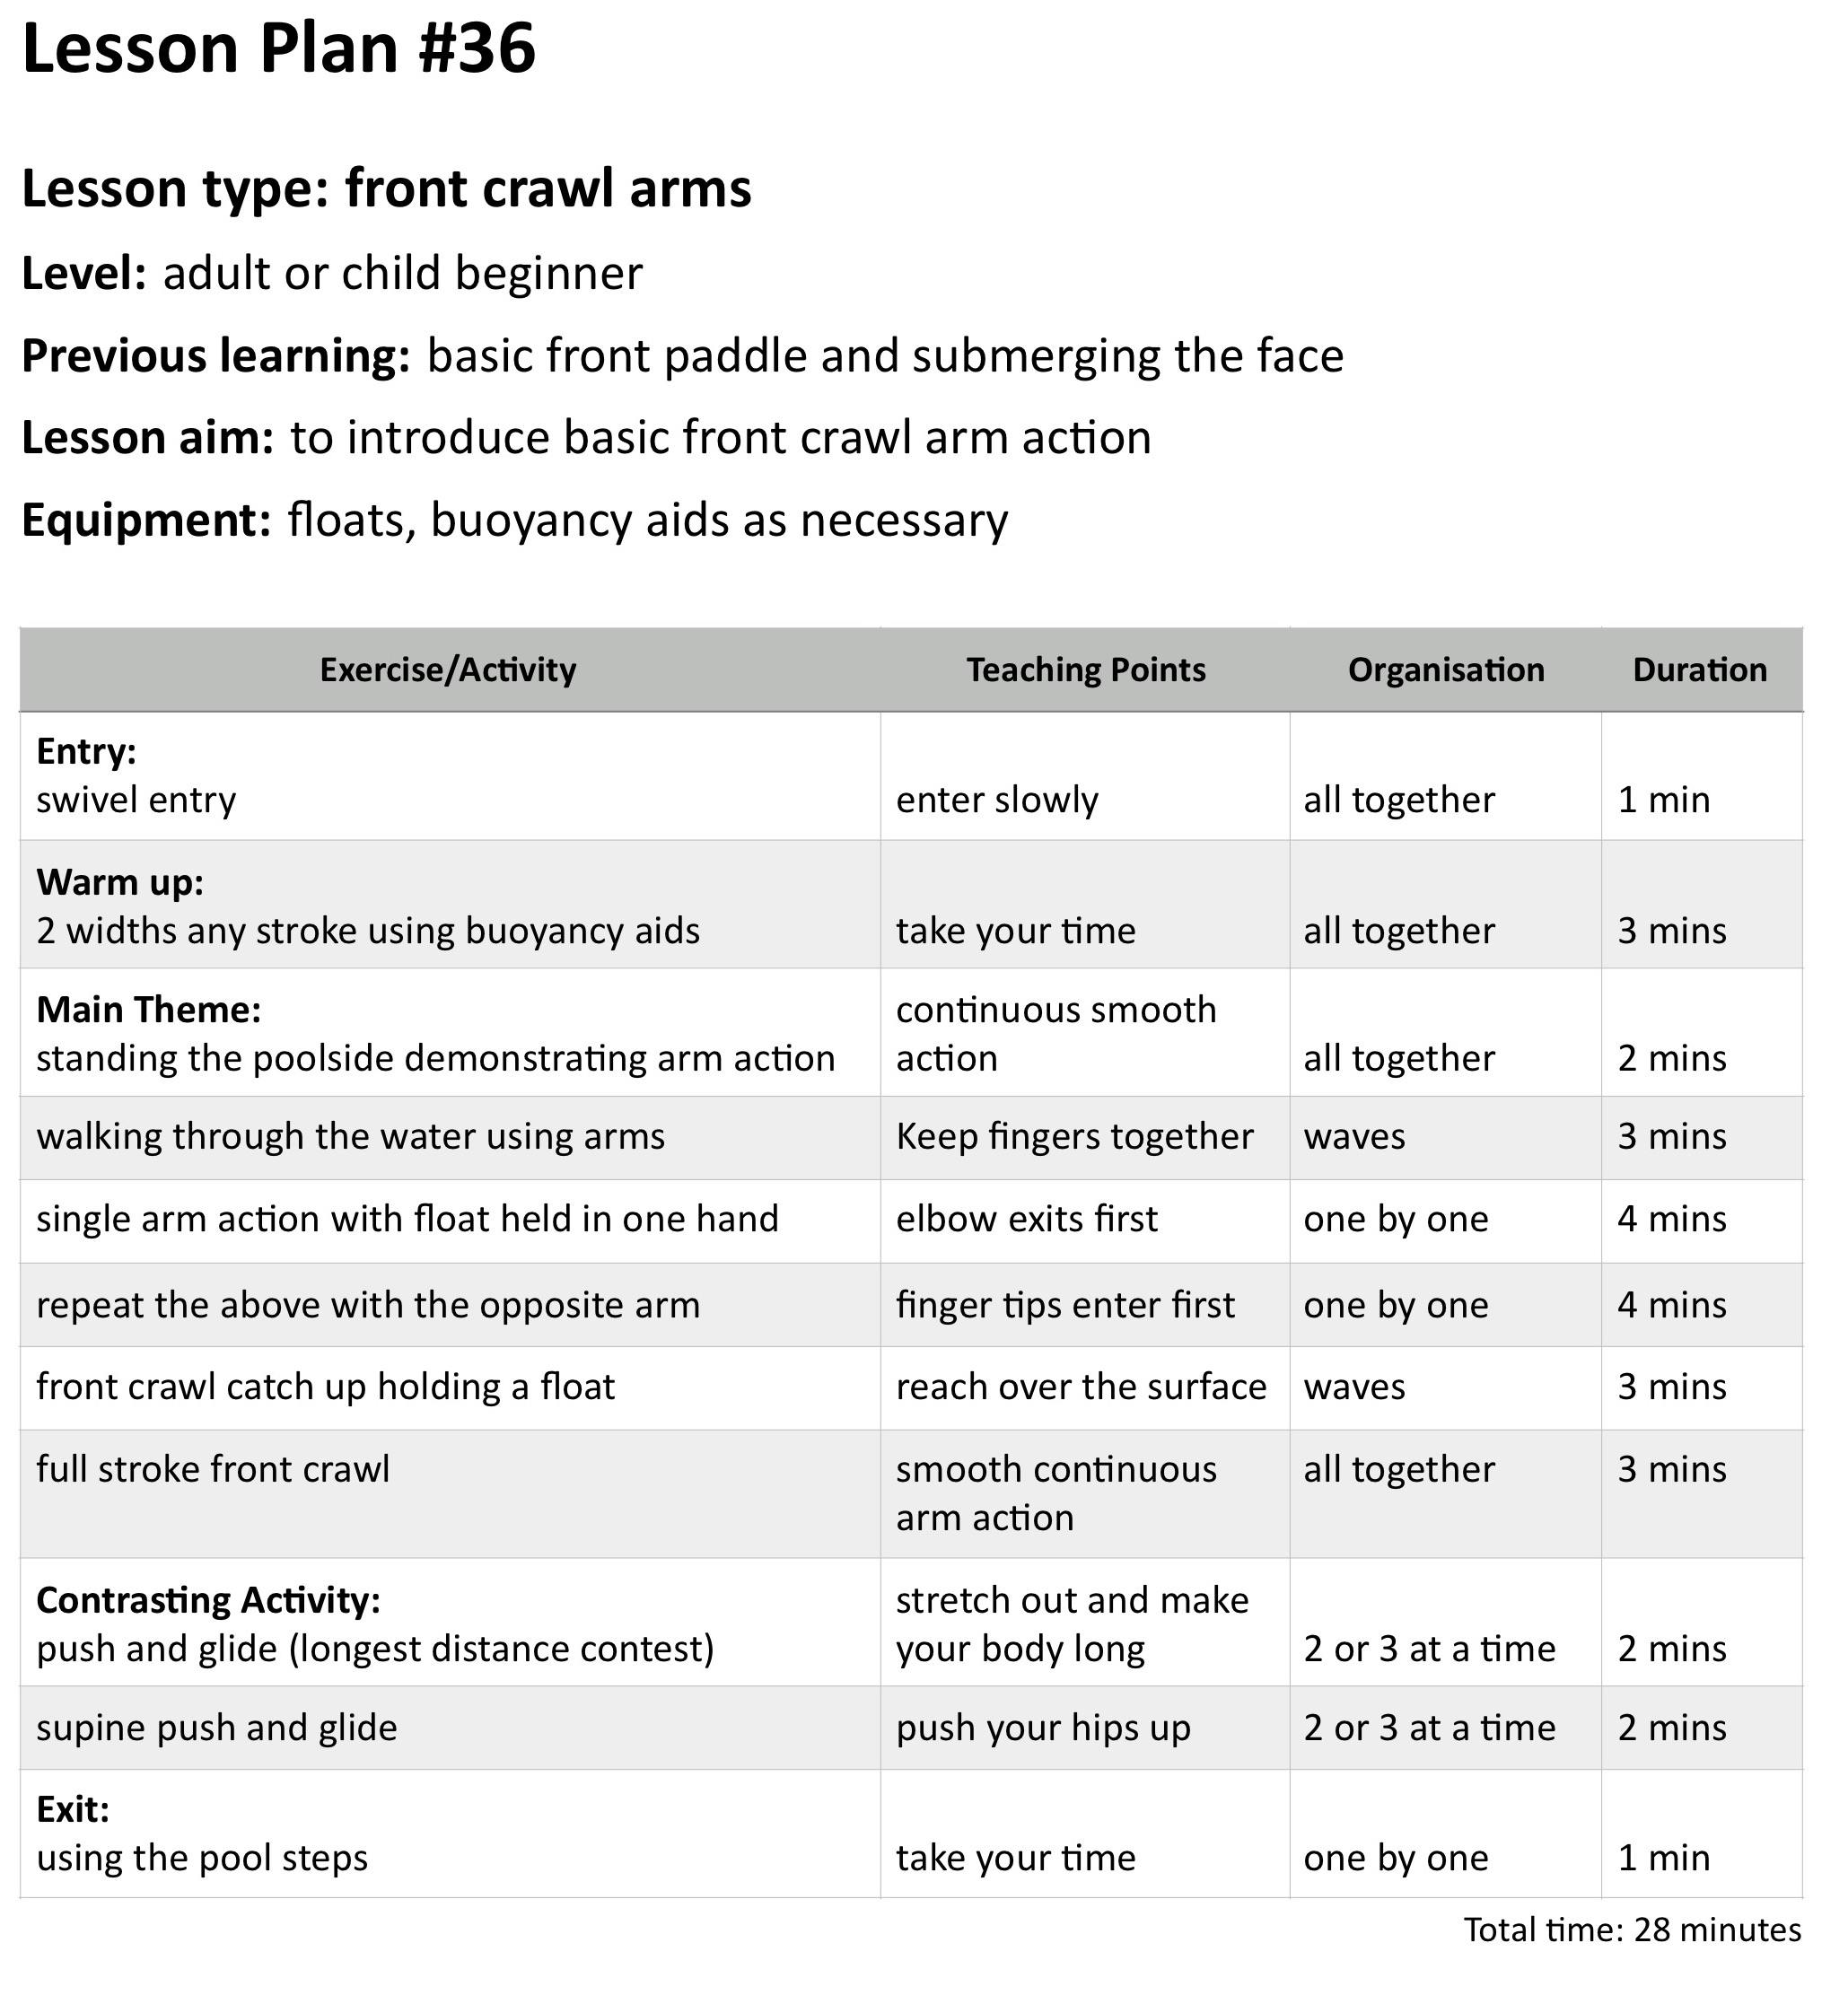 Swimming lesson plan teaching front crawl arm technique